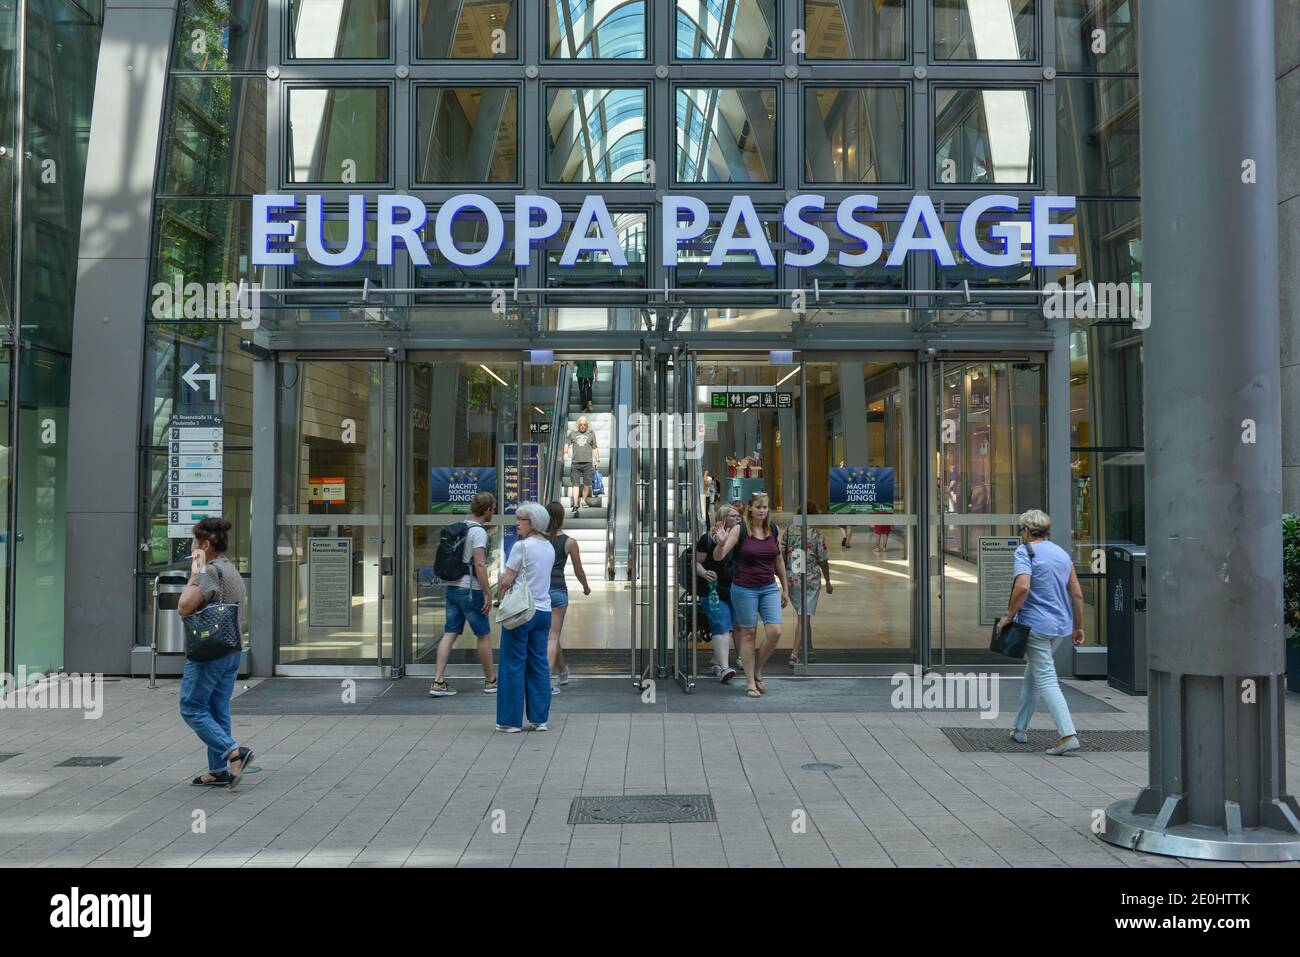 Europa Passage, Ballindamm, Hamburgo, Alemania Foto de stock